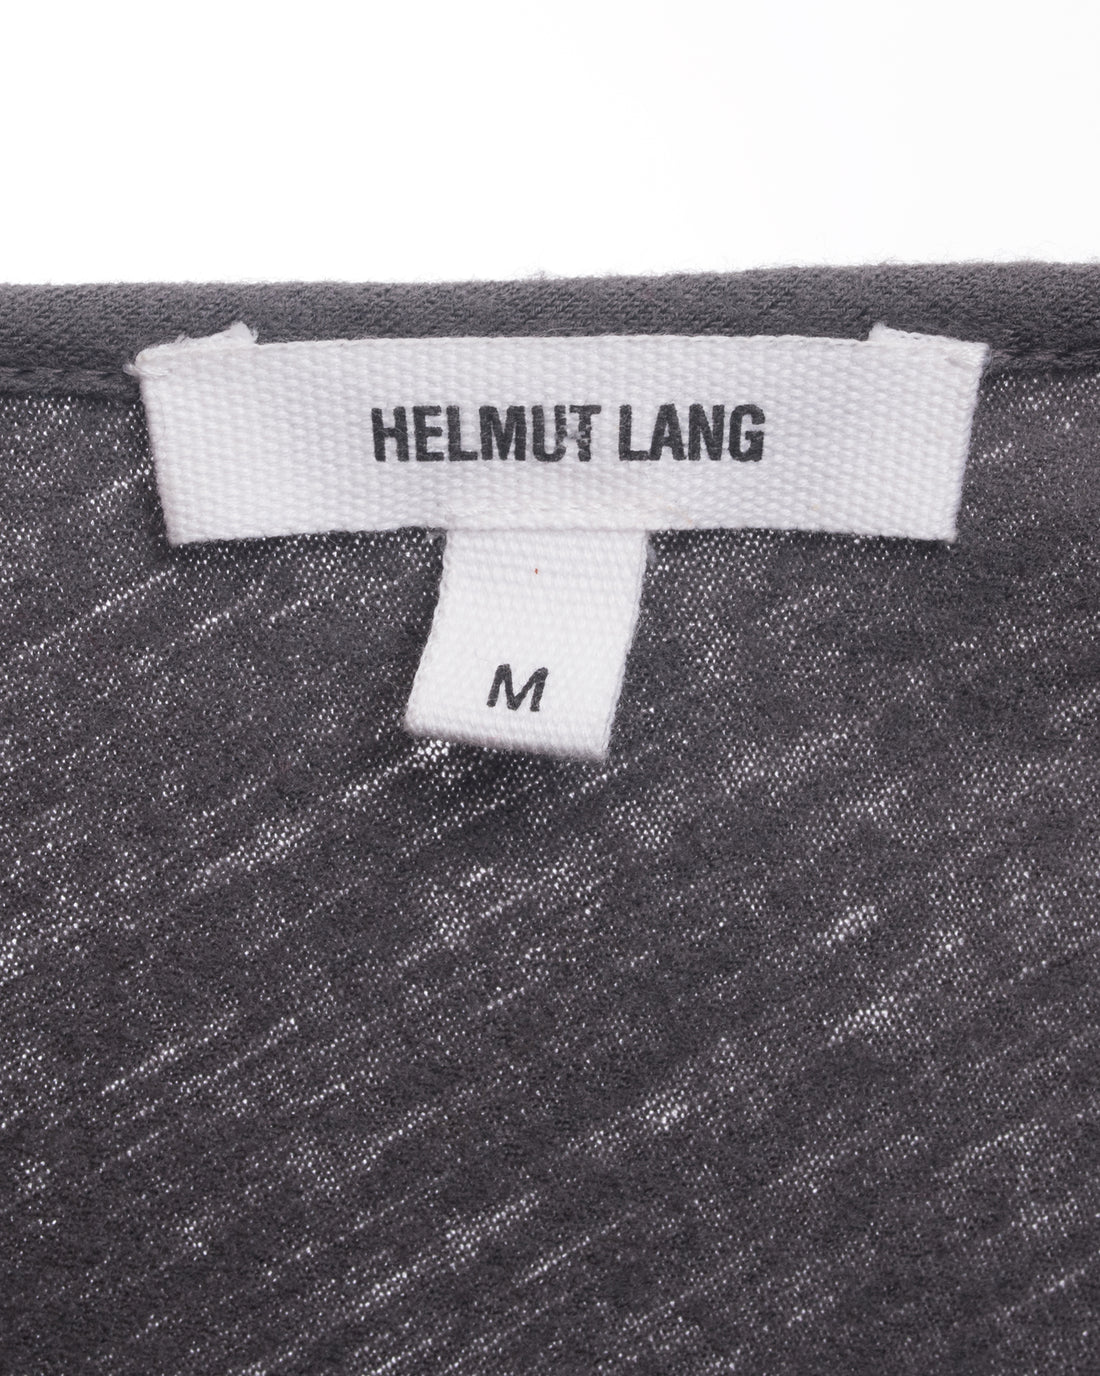 Helmut Lang Light Grey Taupe Wool Asymmetrical Knit Dress - M